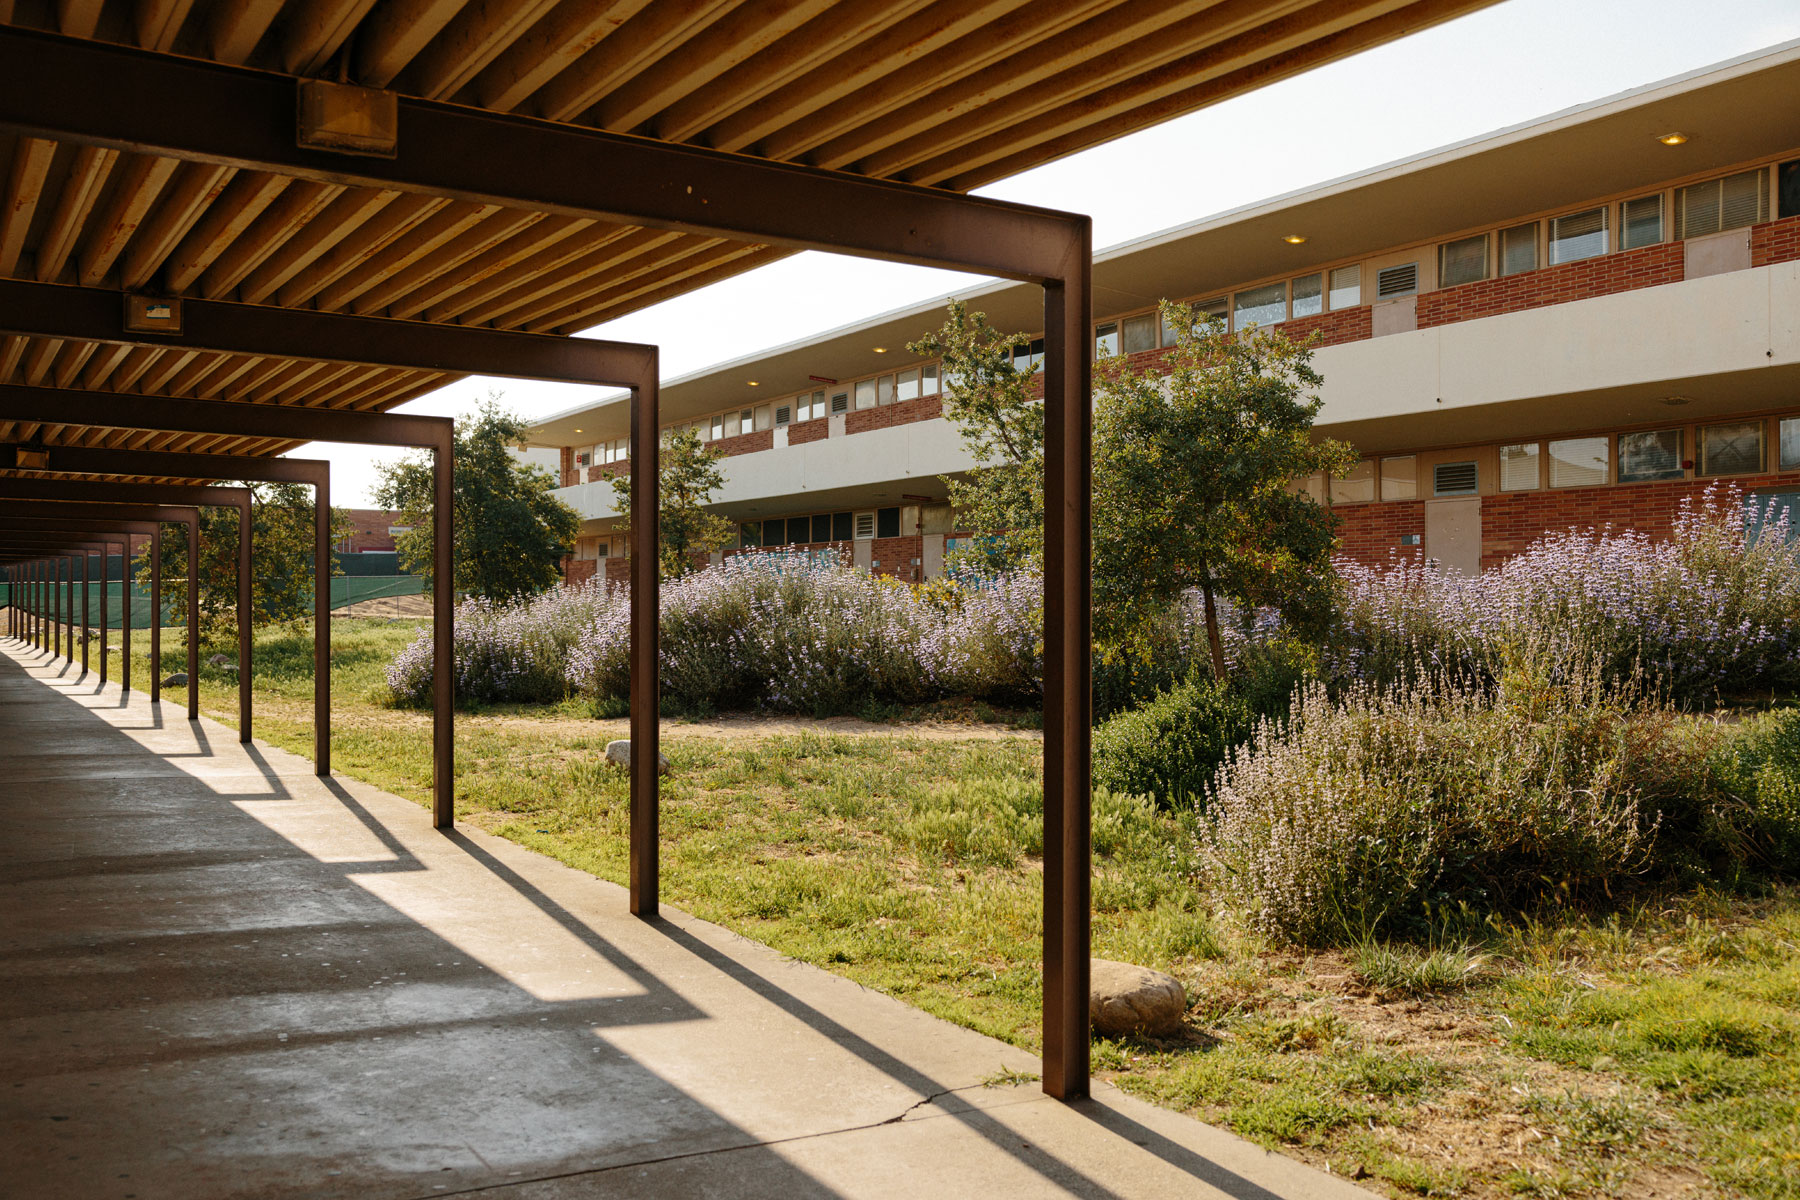 An image of an exterior courtyard and walkway at Pasadena High School.